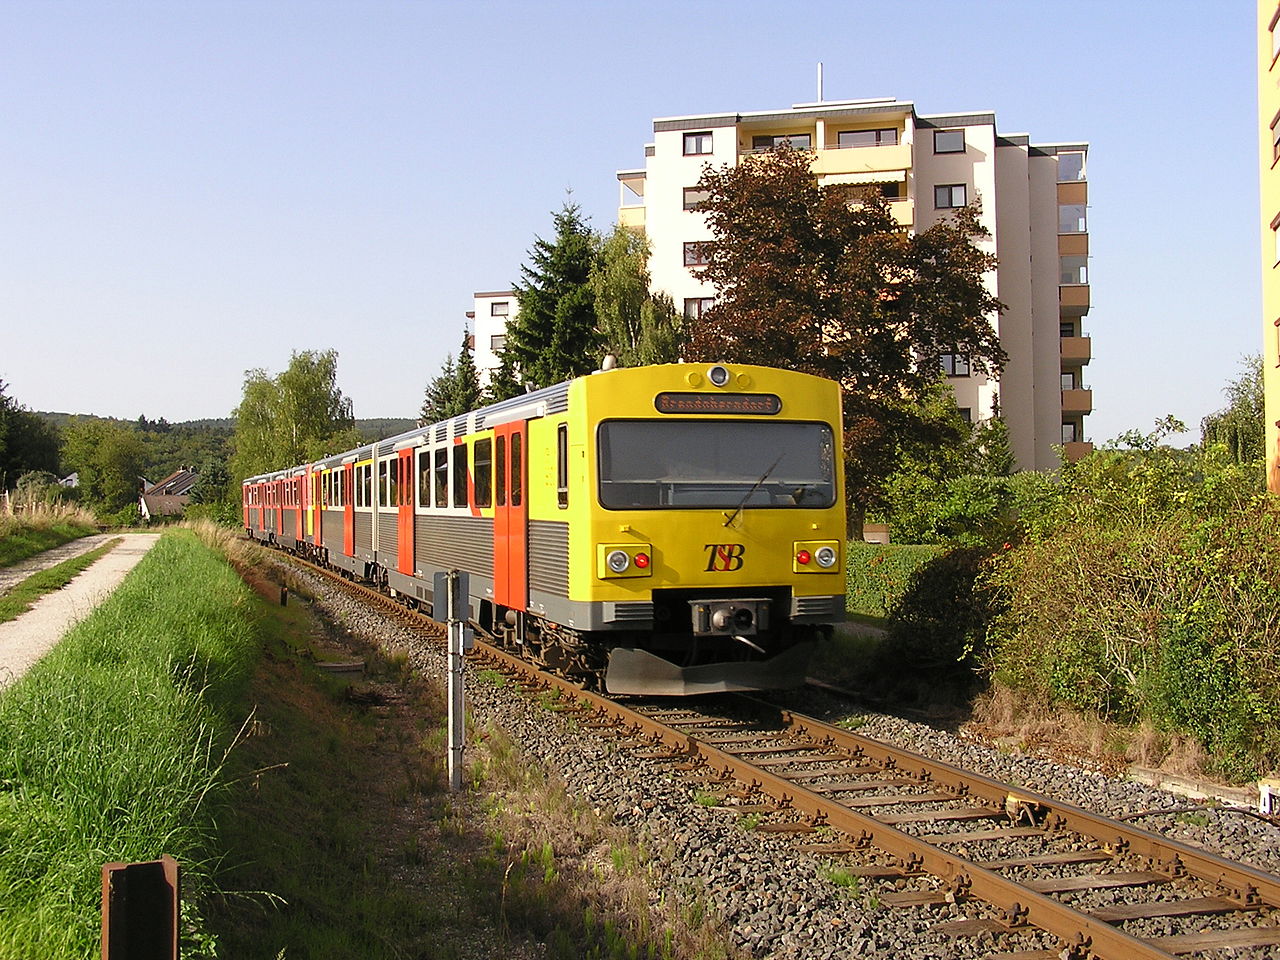 1280px-Taunusbahn_Koeppern.jpg